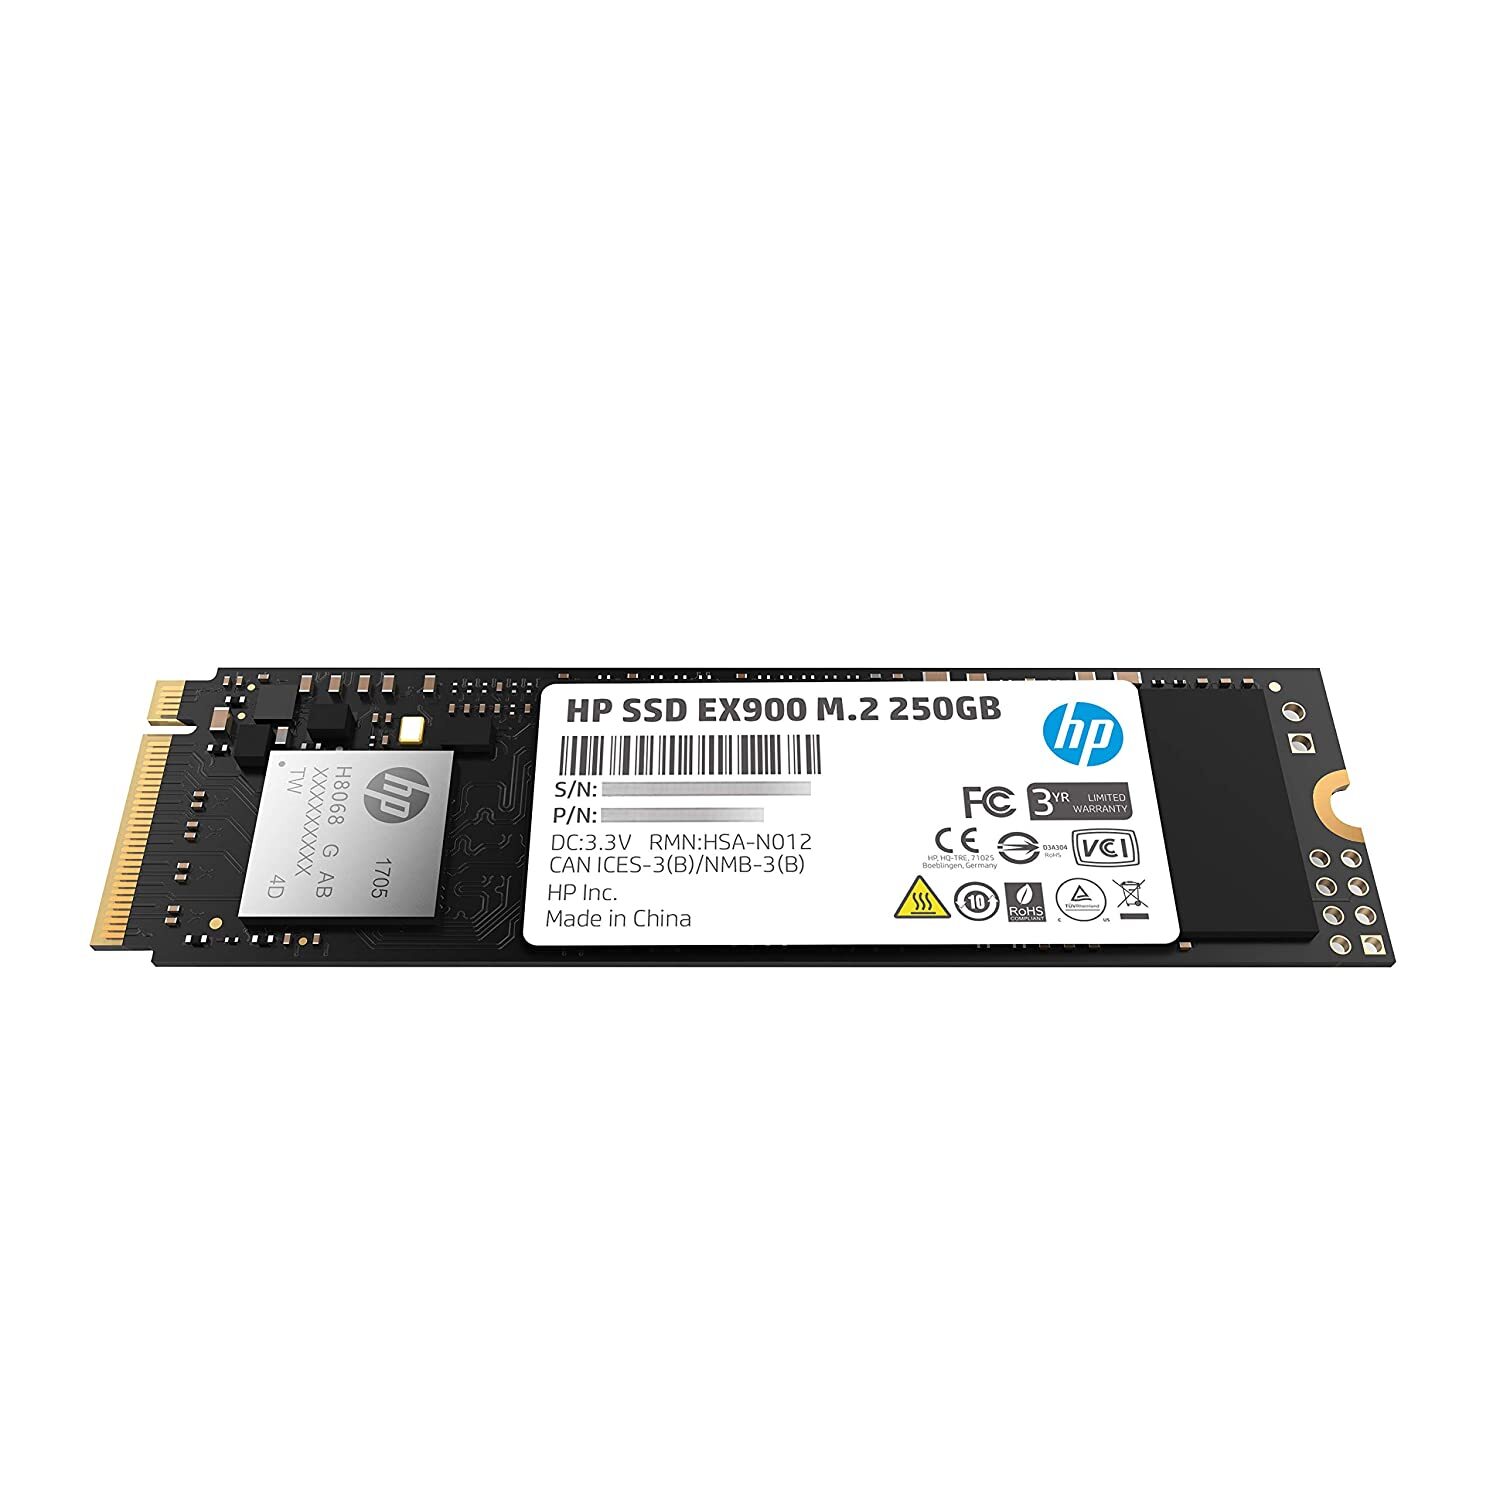 HP EX900 M.2 250GB PCIe 3.1 x 4 NVMe 3D TLC NAND Internal Solid State Drive (SSD) Max 2100 MBps (2YY43AA#ABC)